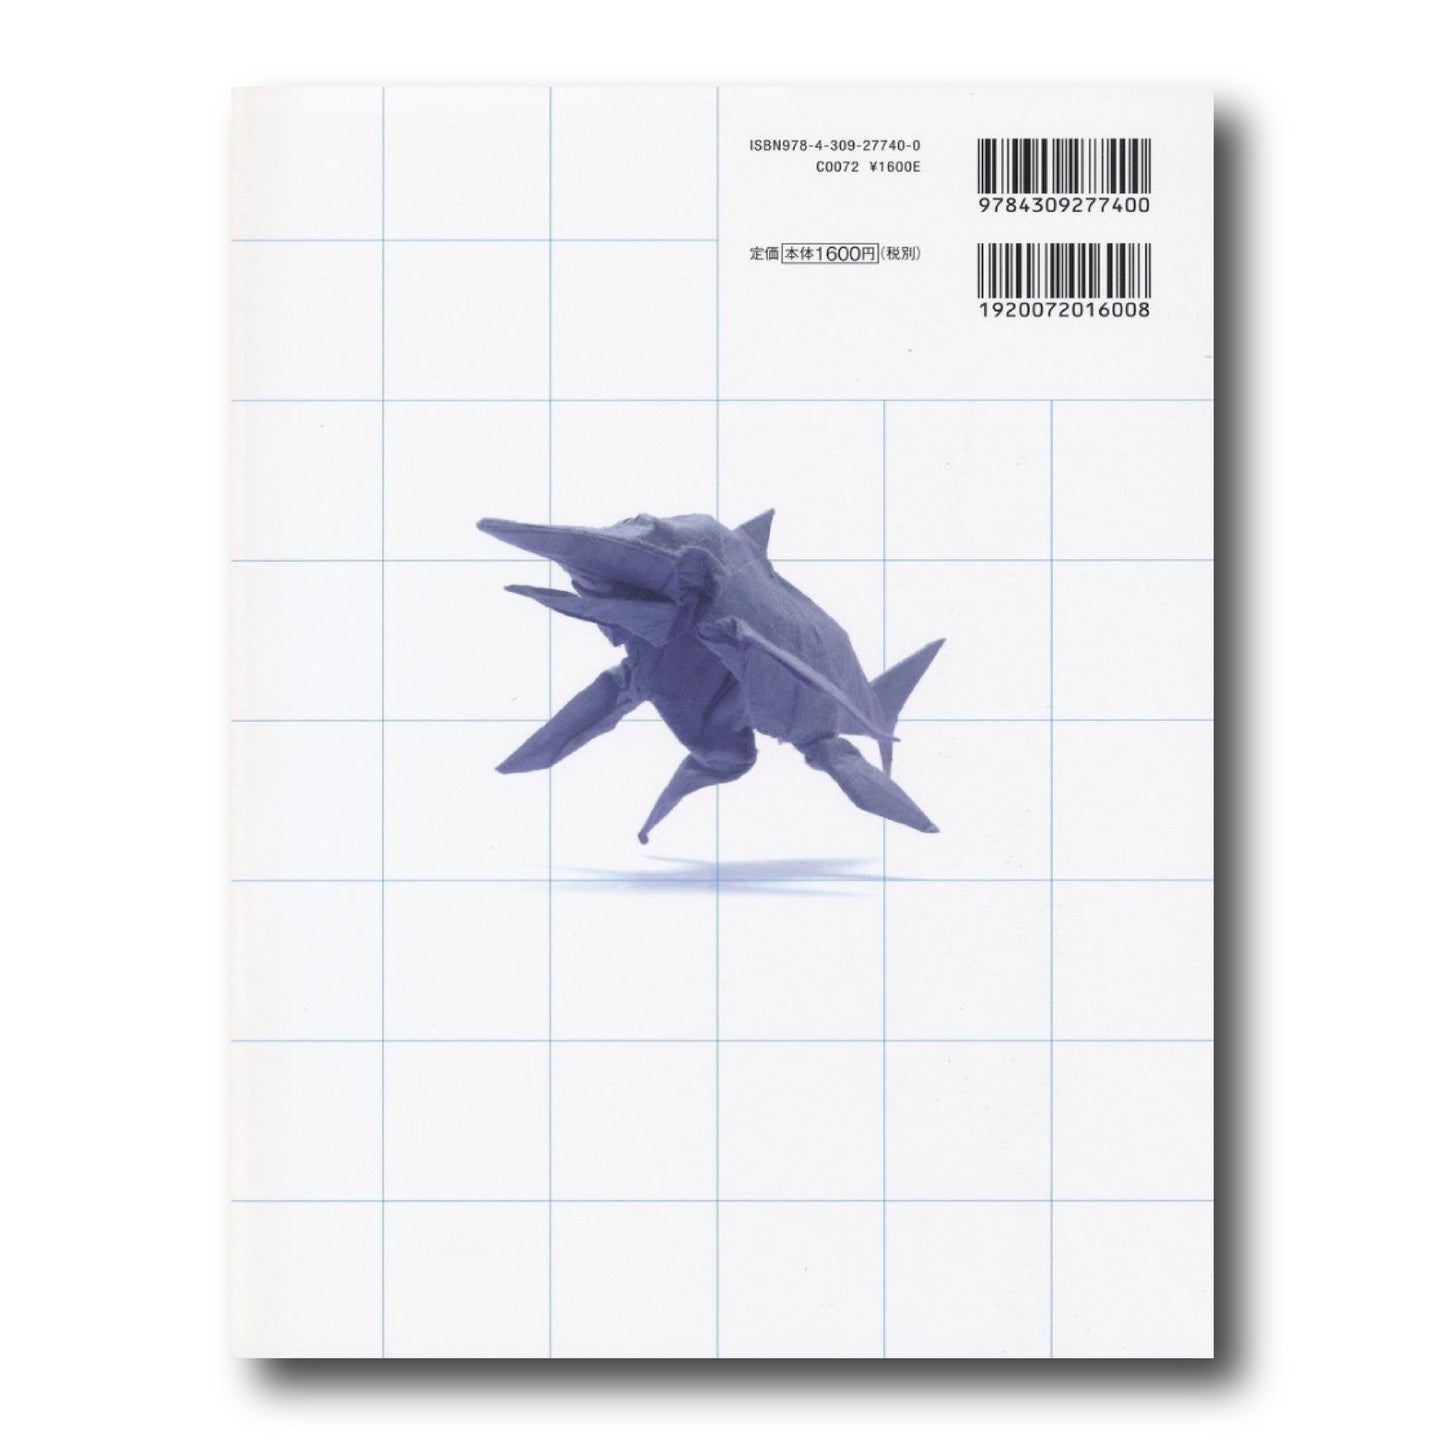 Realistic Origami: Aquatic Creatures Edition (Japanese Edition)